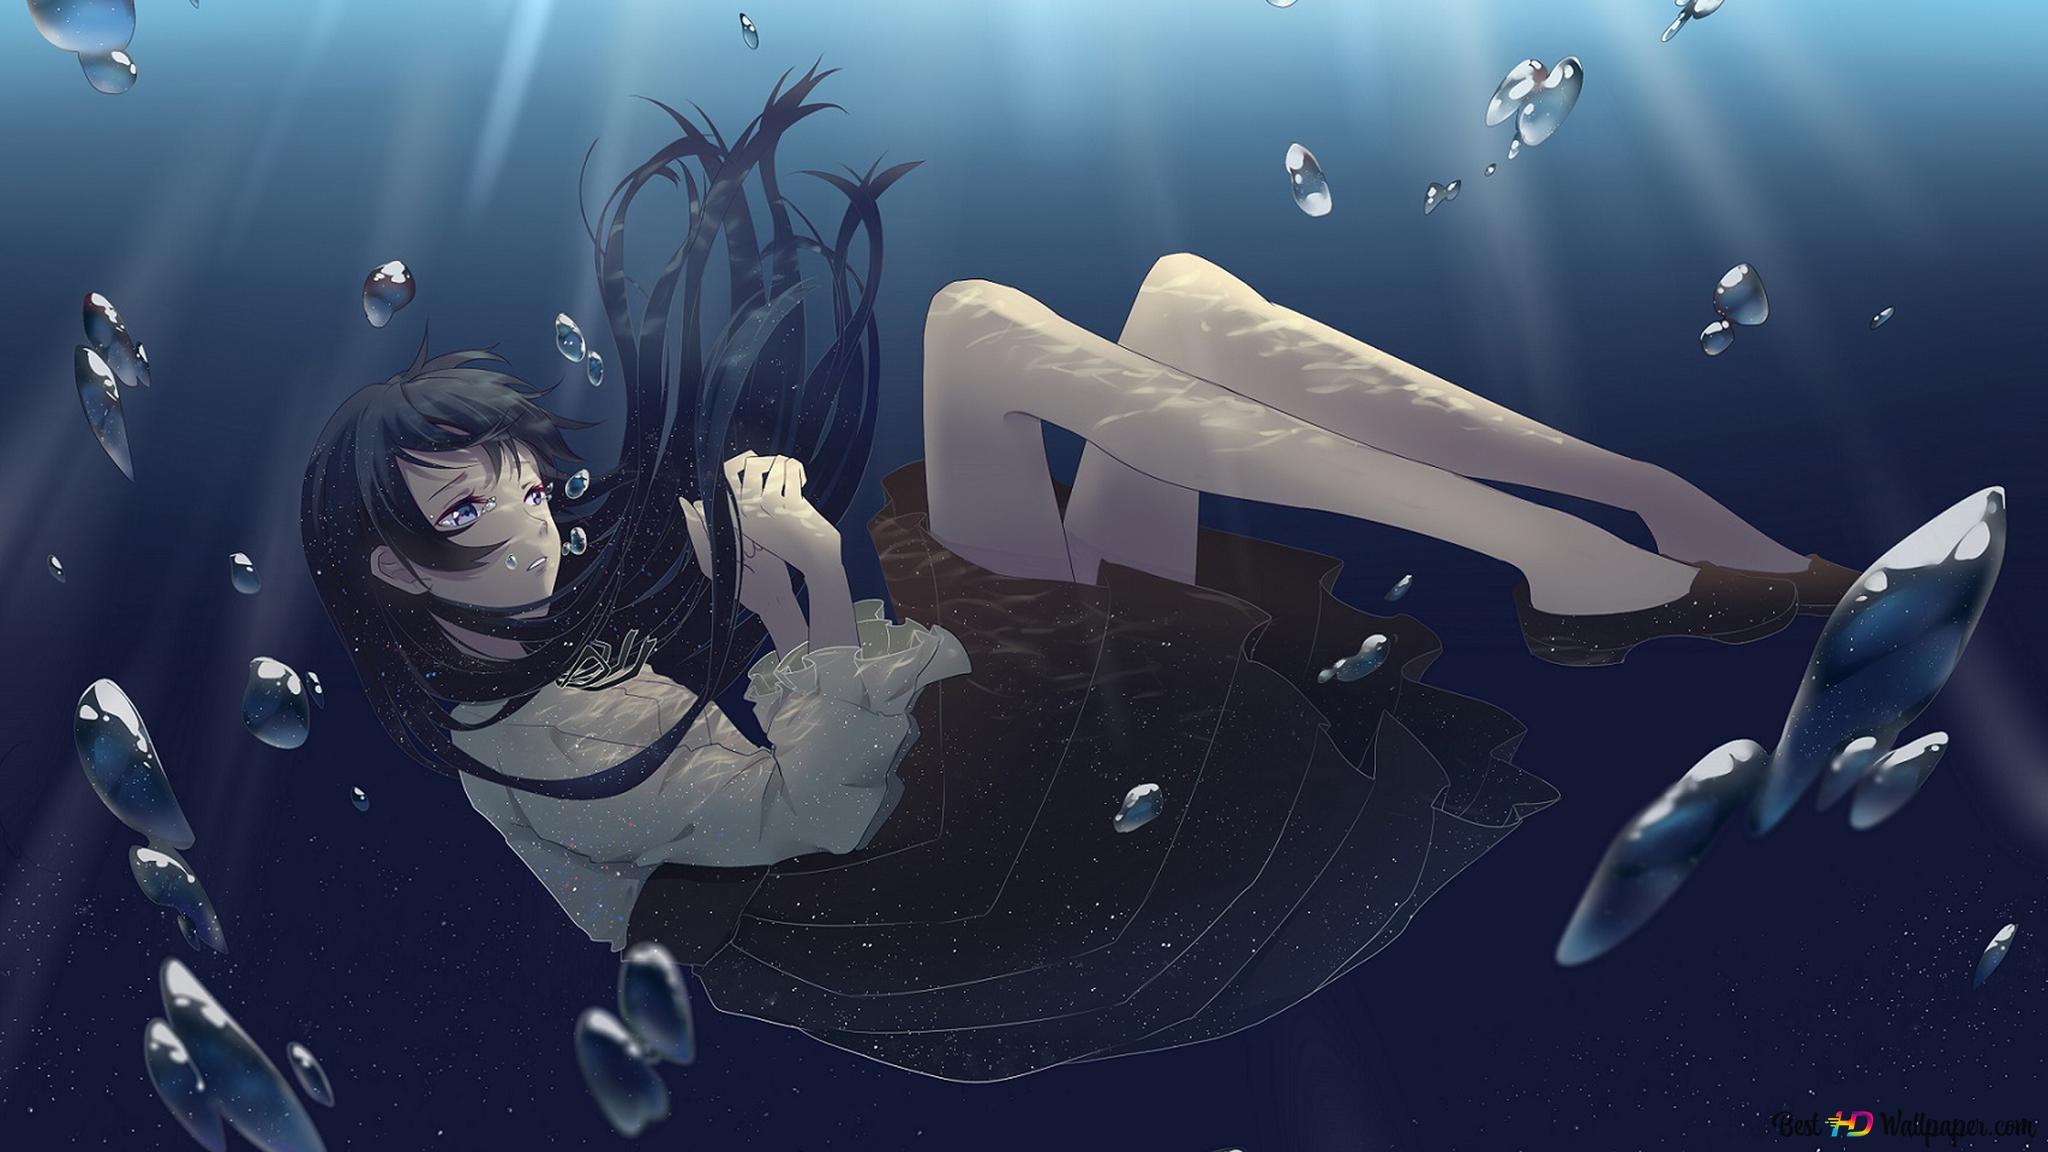 Underwater Drowning 2K wallpaper download